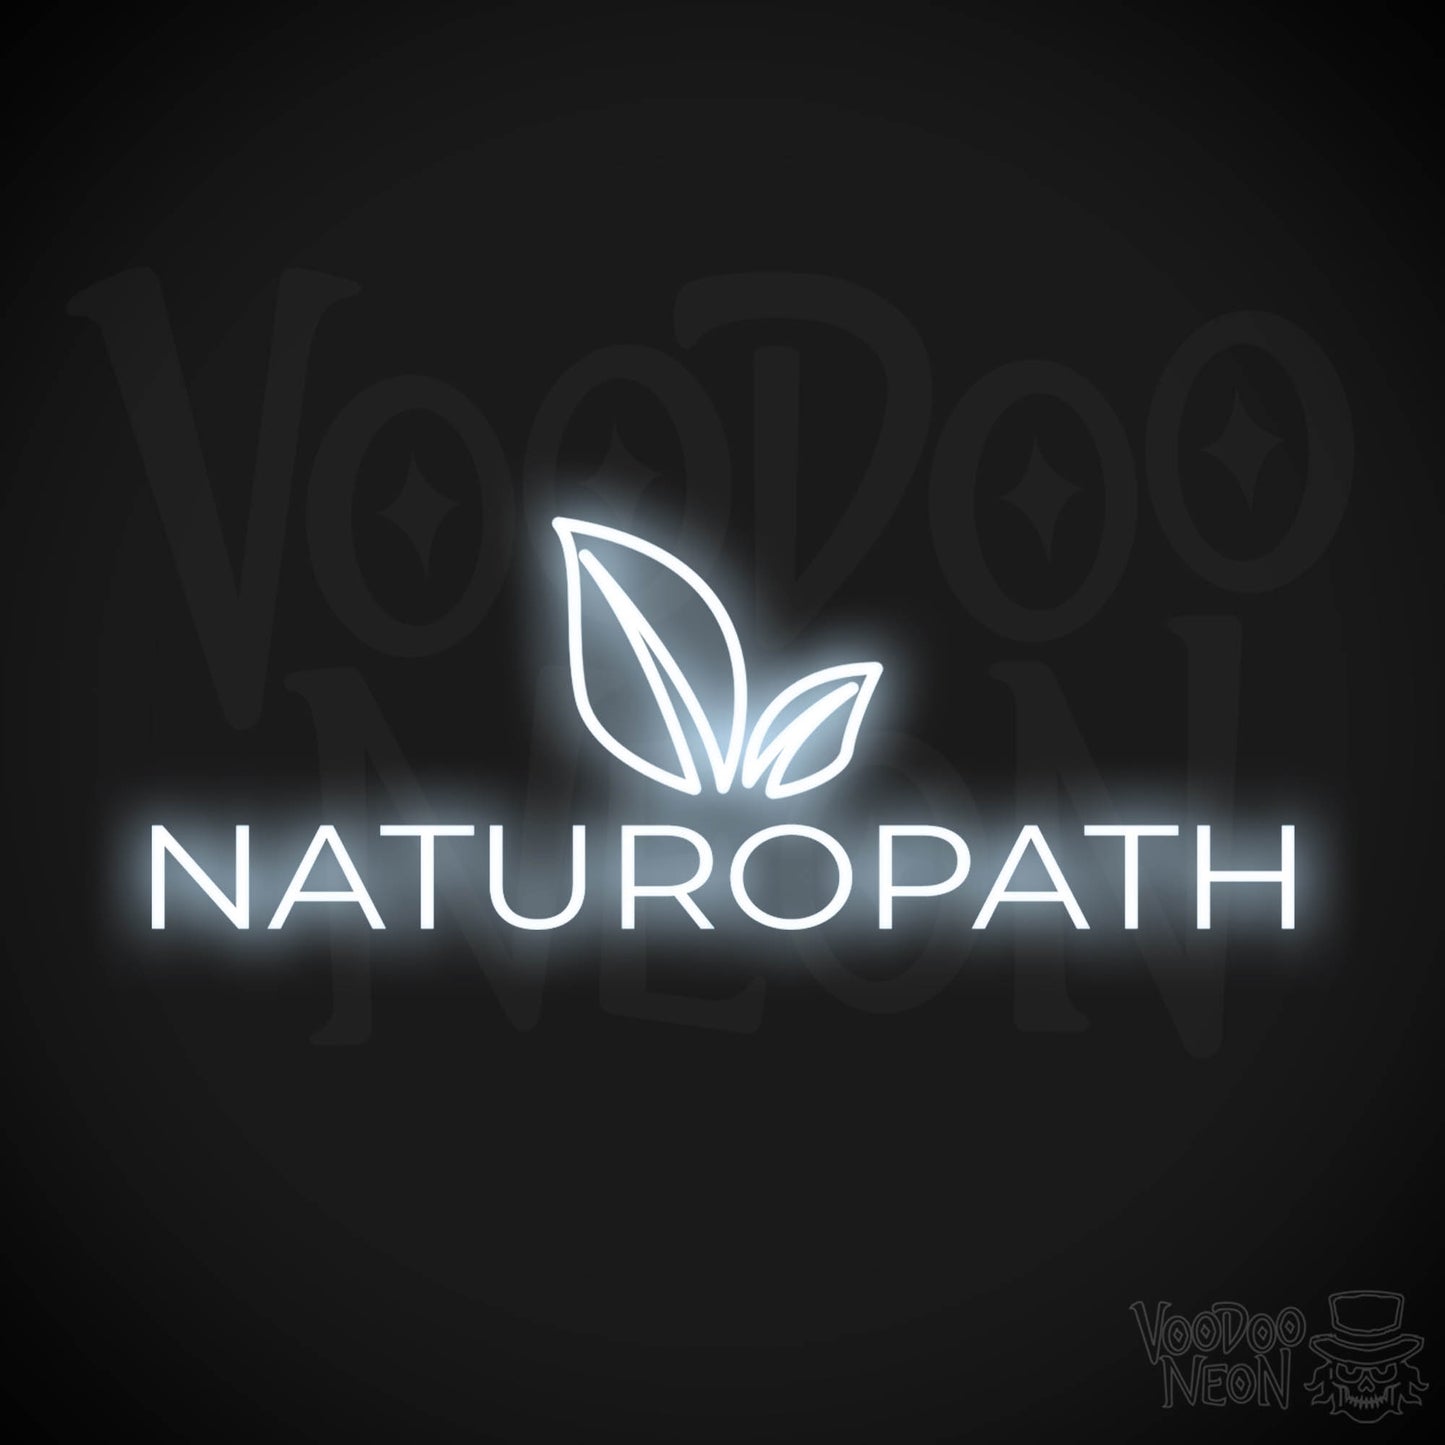 Naturopath LED Neon - Cool White